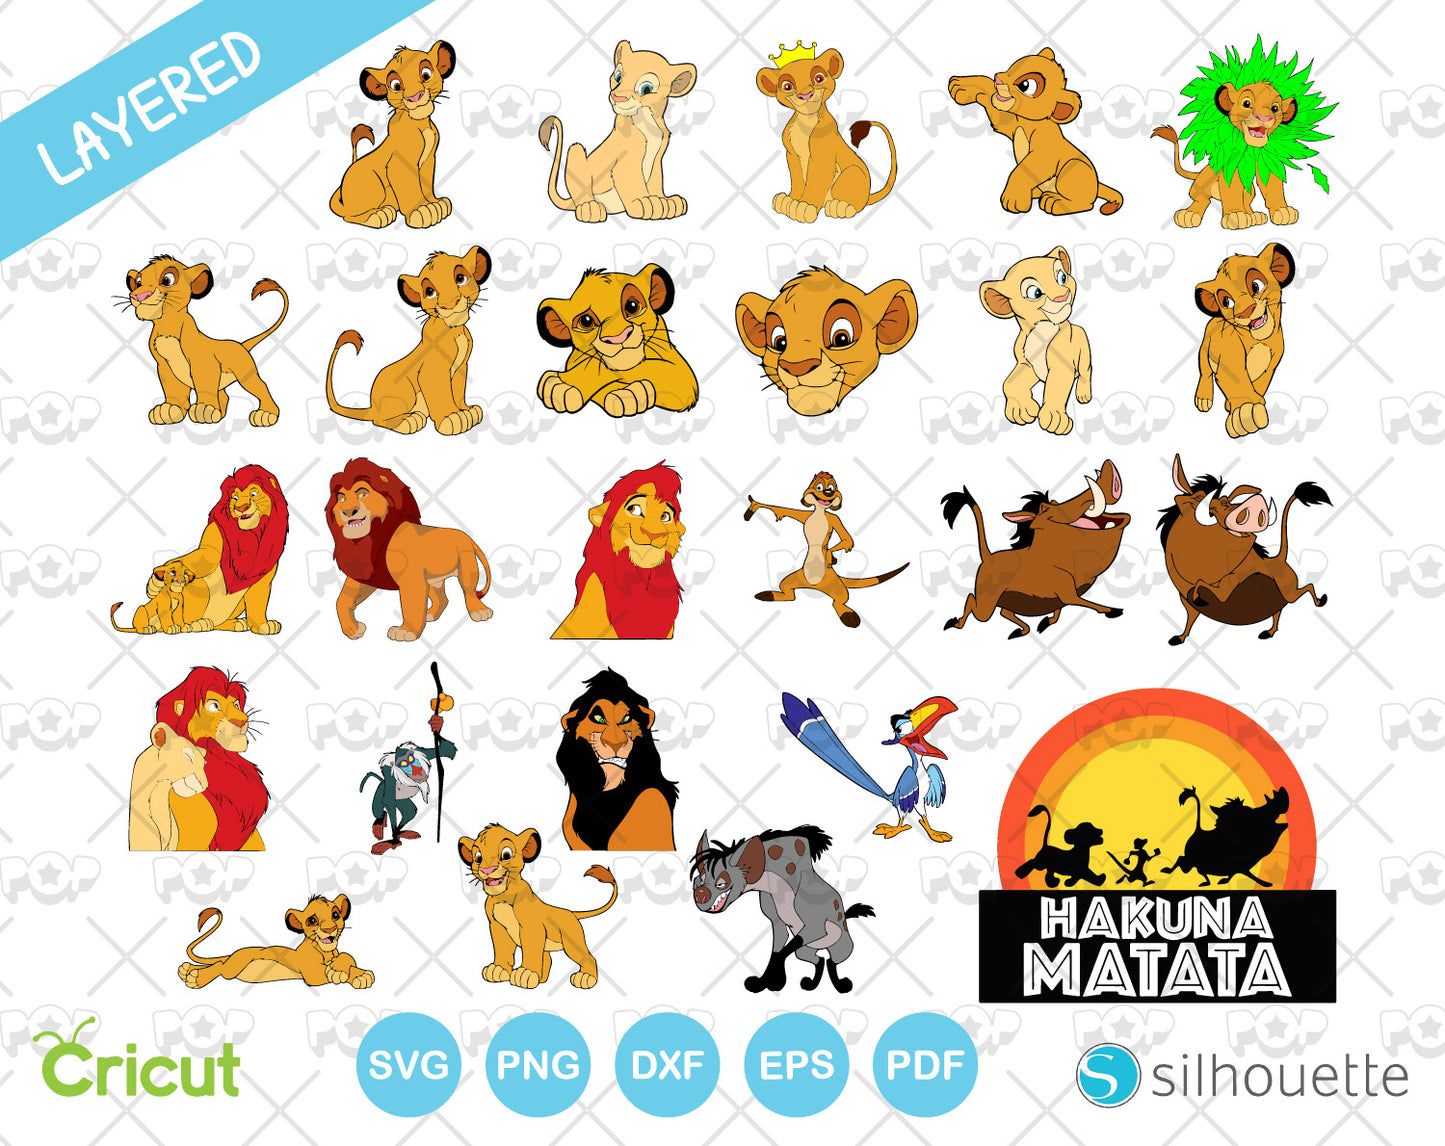 The Lion King 55 cliparts bundle, SVG cut files for Cricut Silhouette, SVG PNG DXF, instant download